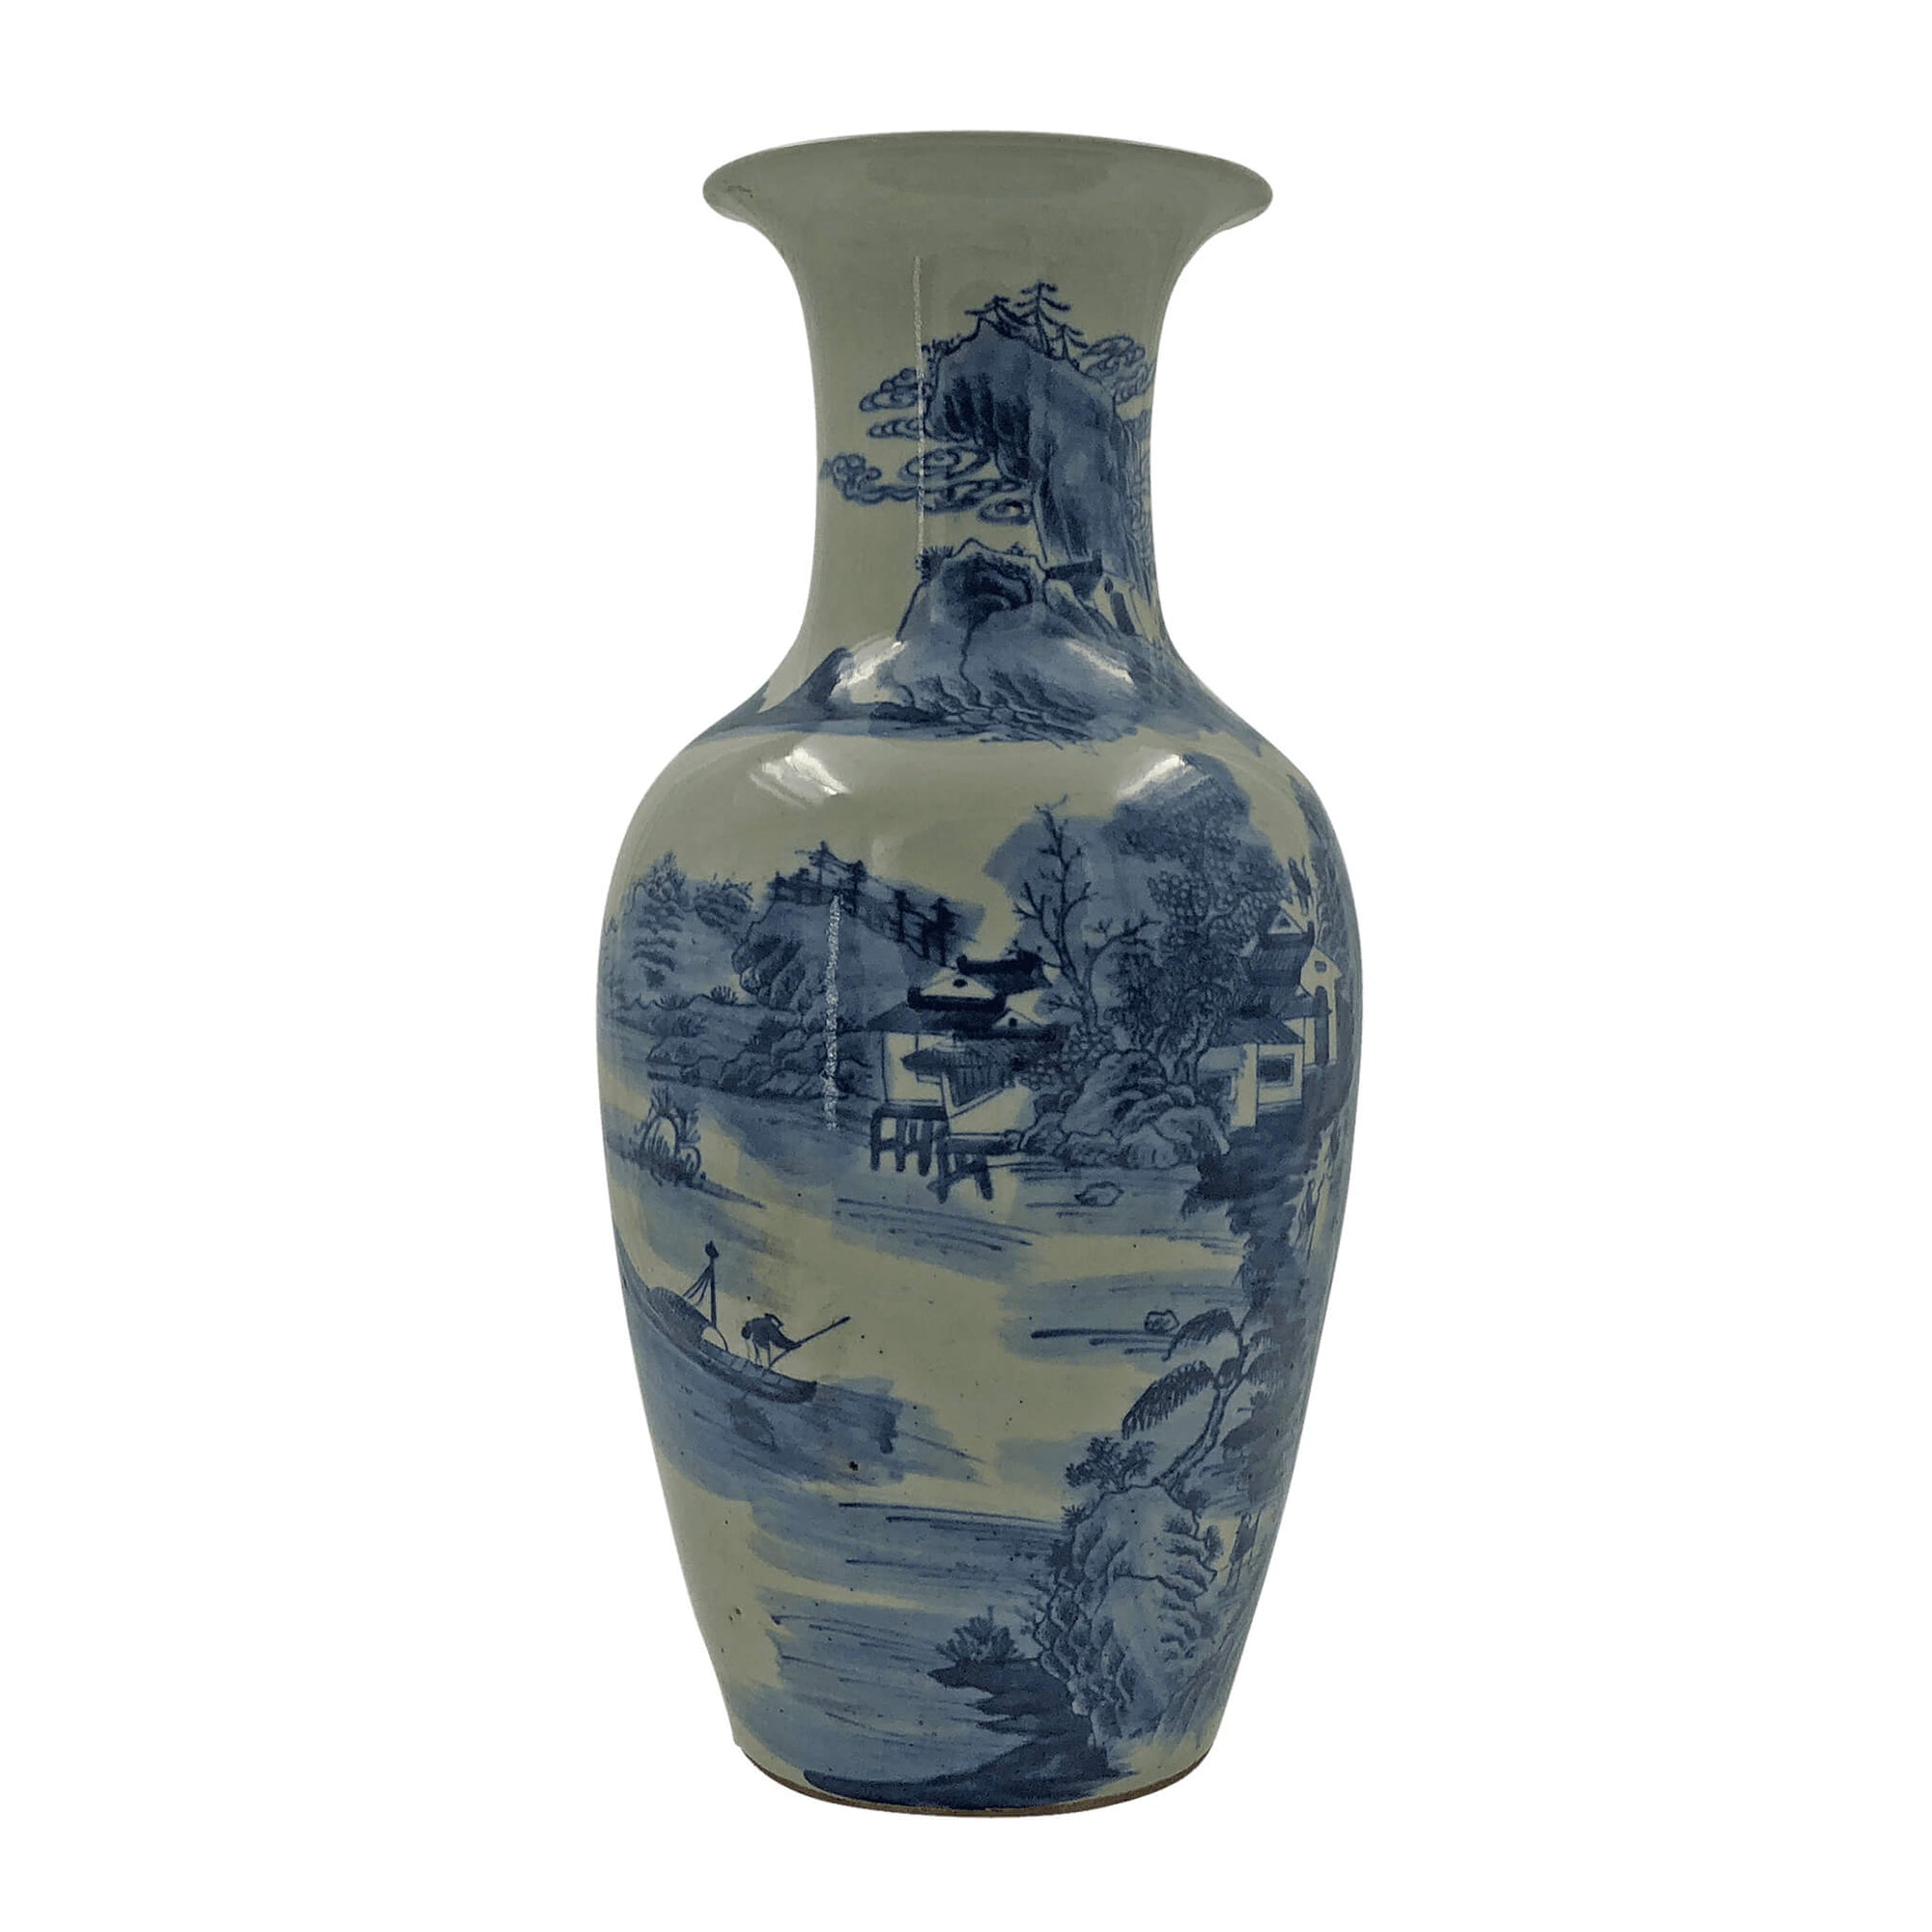 Pair of Chinese Blue and White Lake Vases - English Georgian America